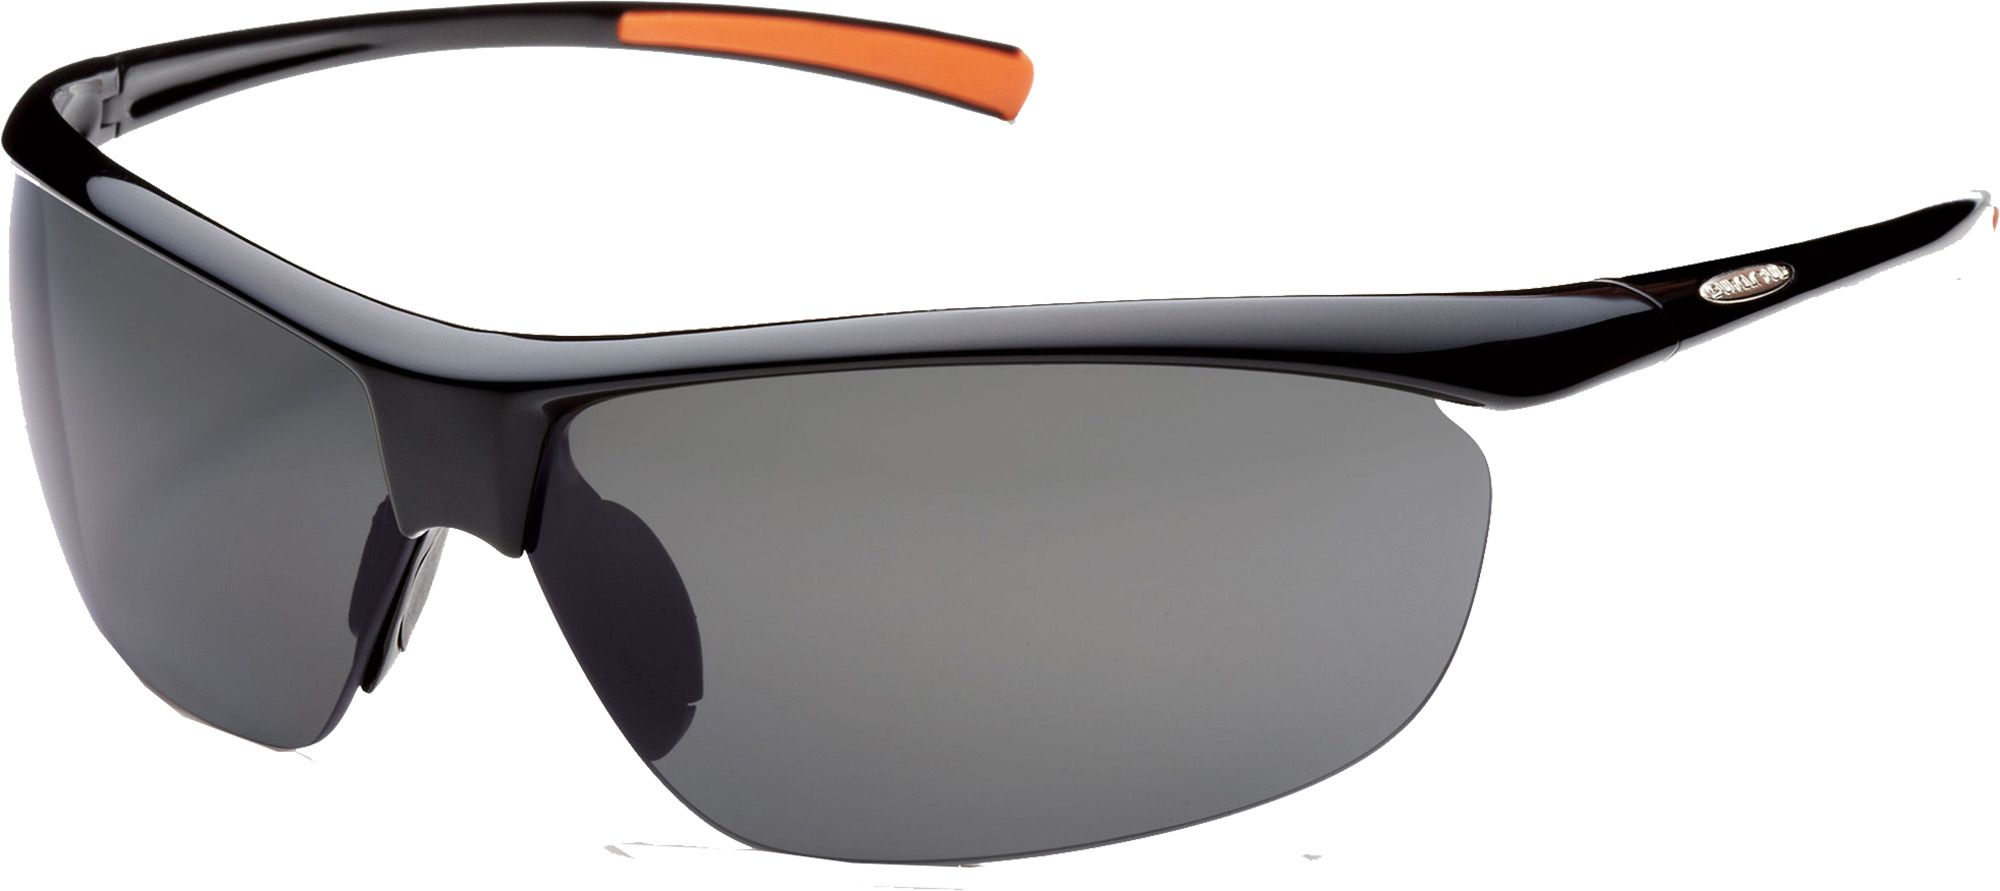 Photos - Sunglasses Suncloud Zephyr Polarized , Men's, Black/Grey Polarized 17AF9AZP